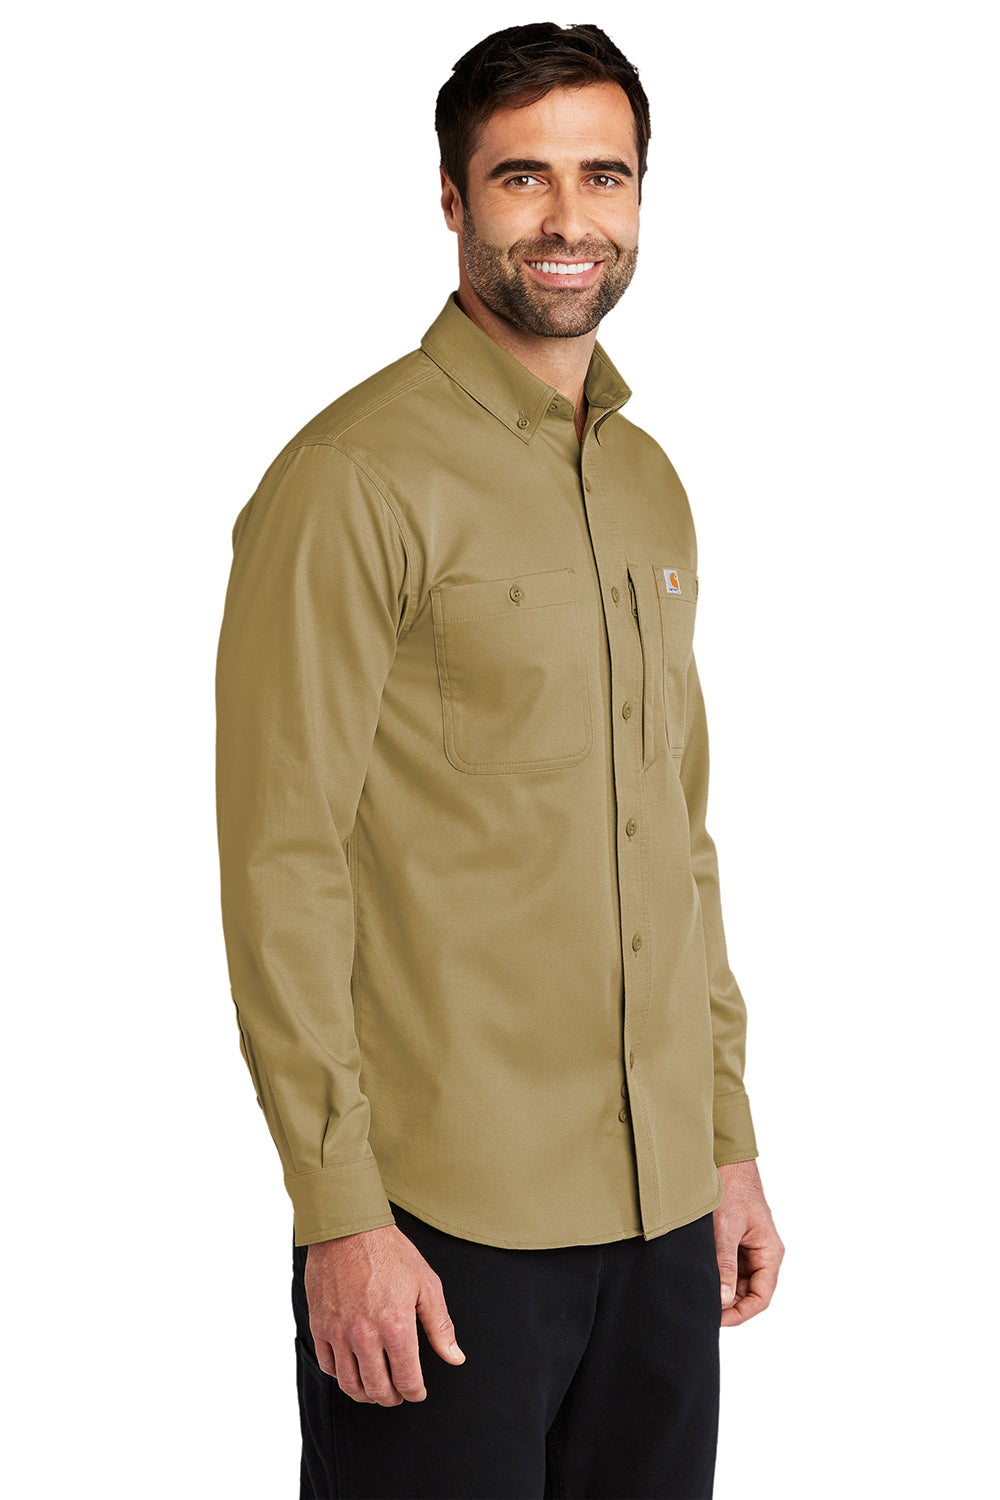 Carhartt CT102538 Mens Rugged Professional Series Wrinkle Resistant Long Sleeve Button Down Shirt w/ Pocket Dark Khaki Brown Model 3Q